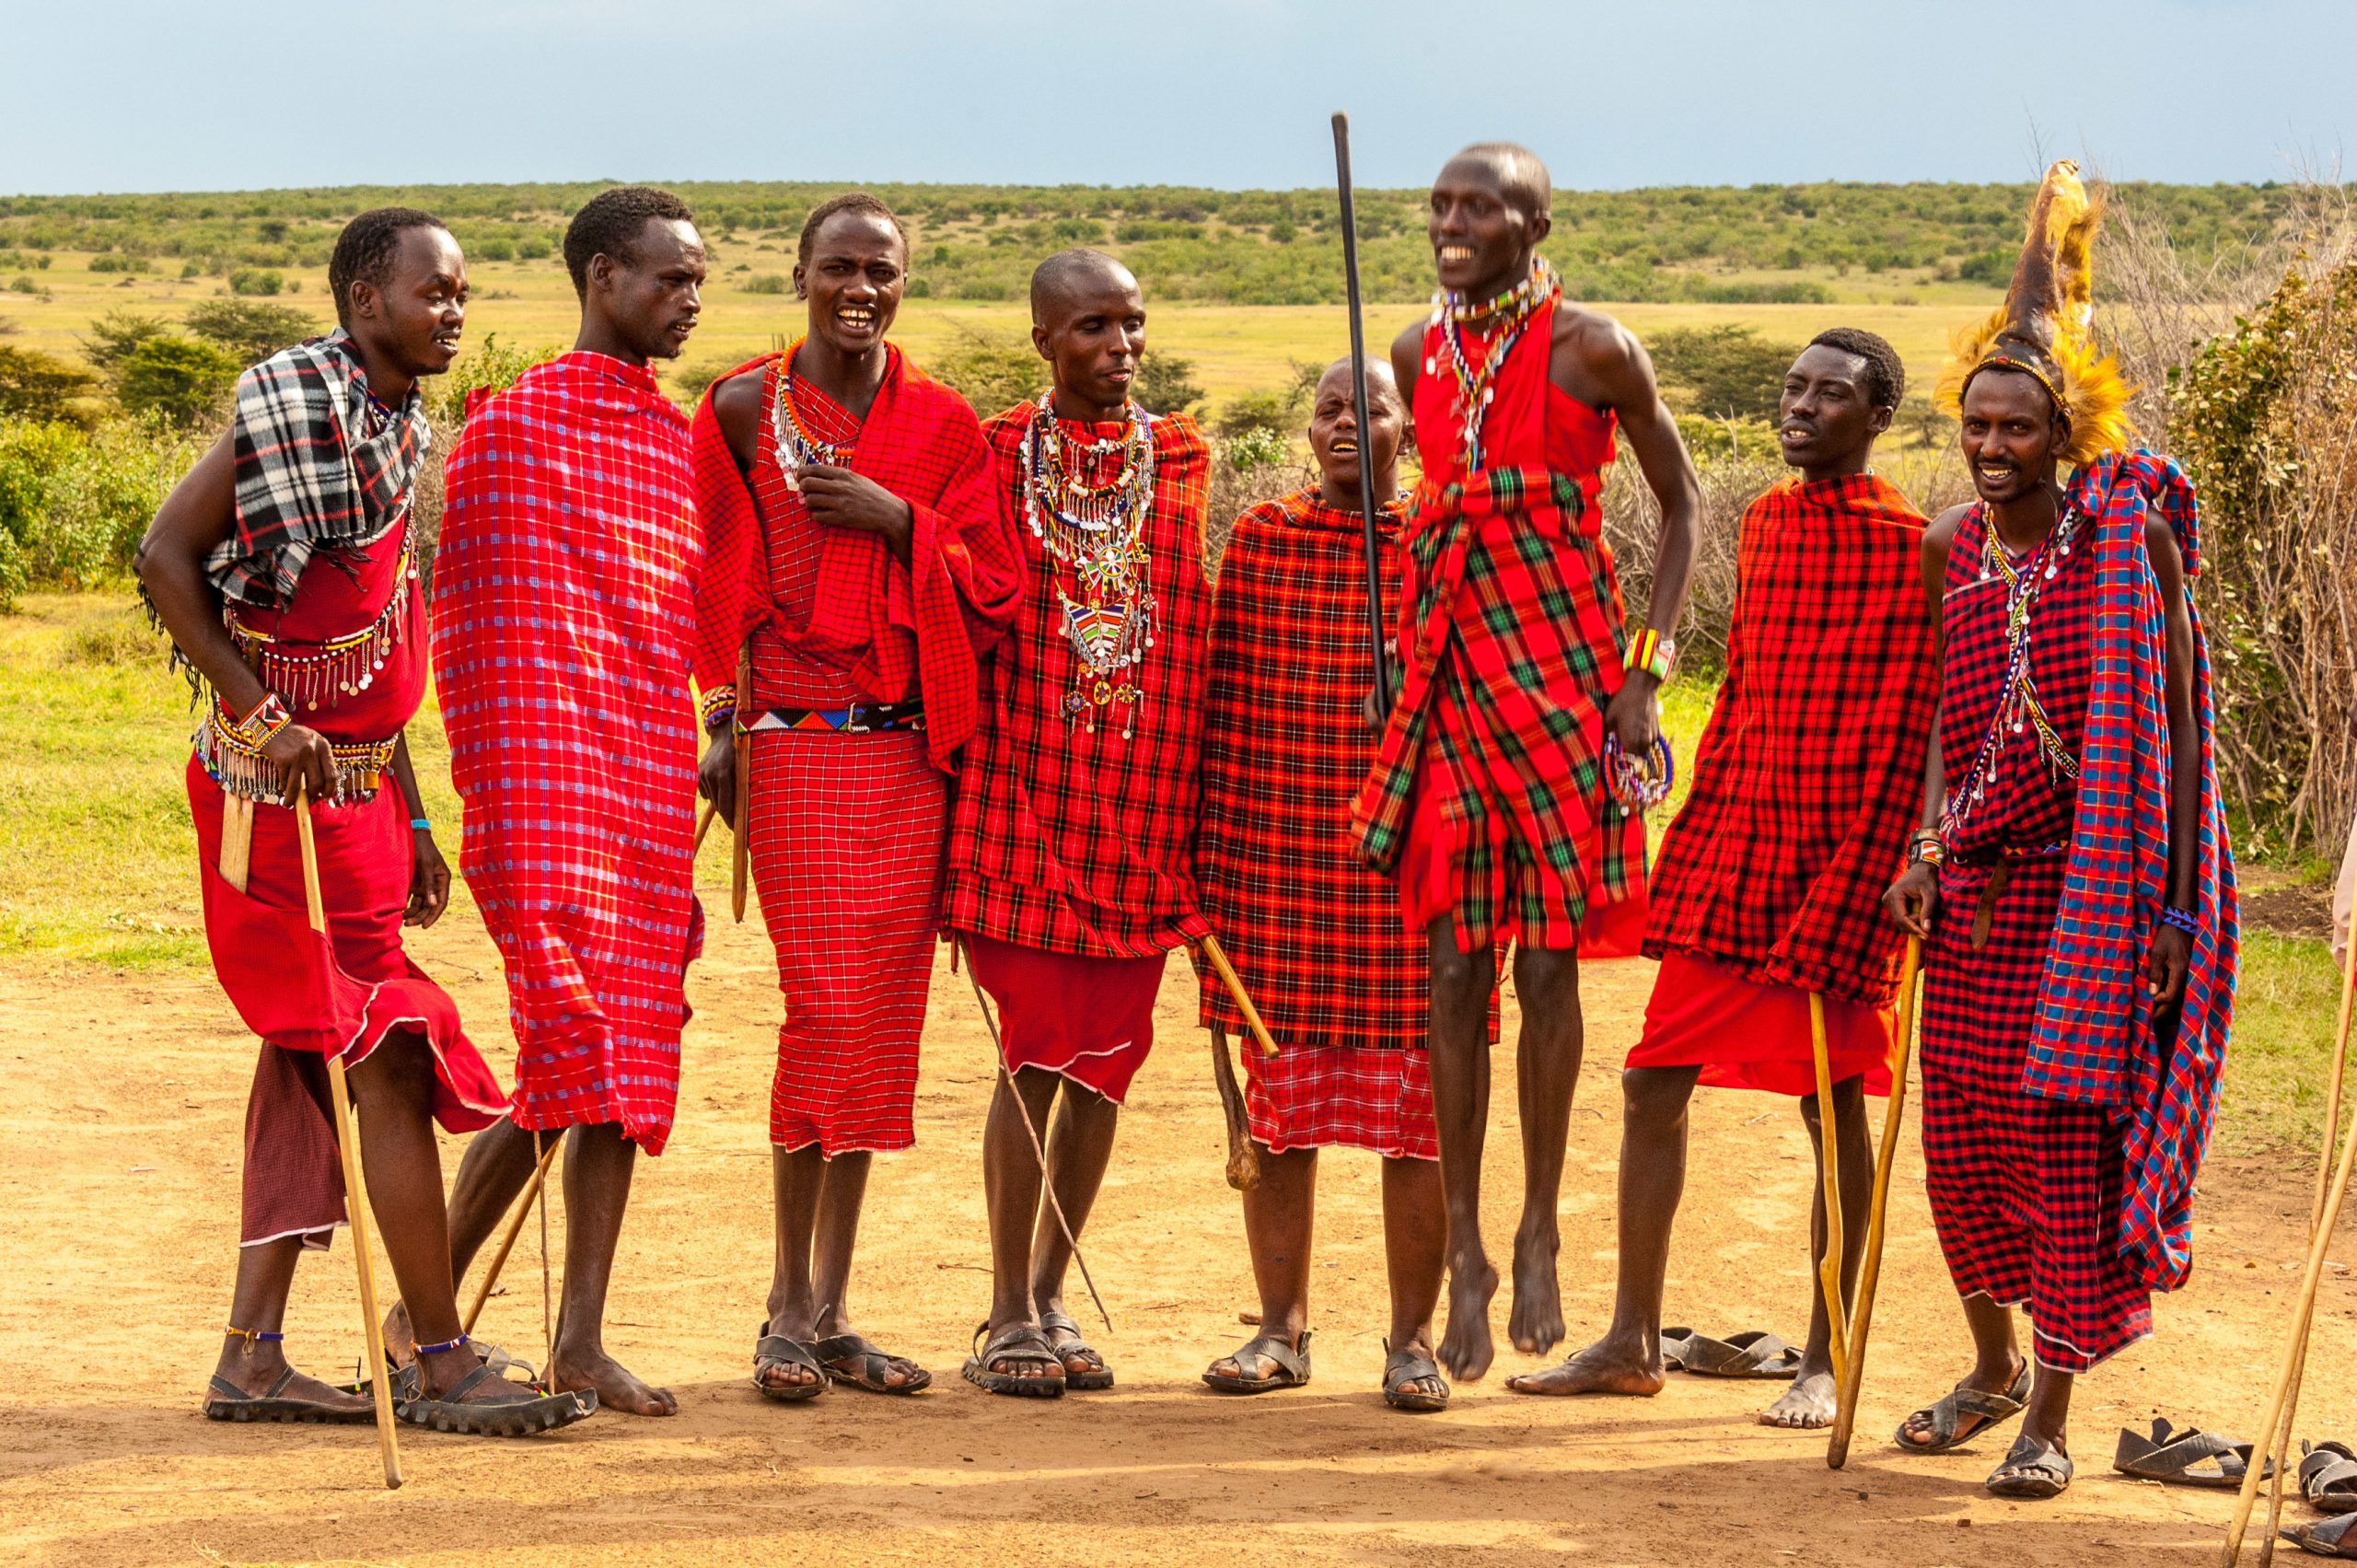 masai mara village visit